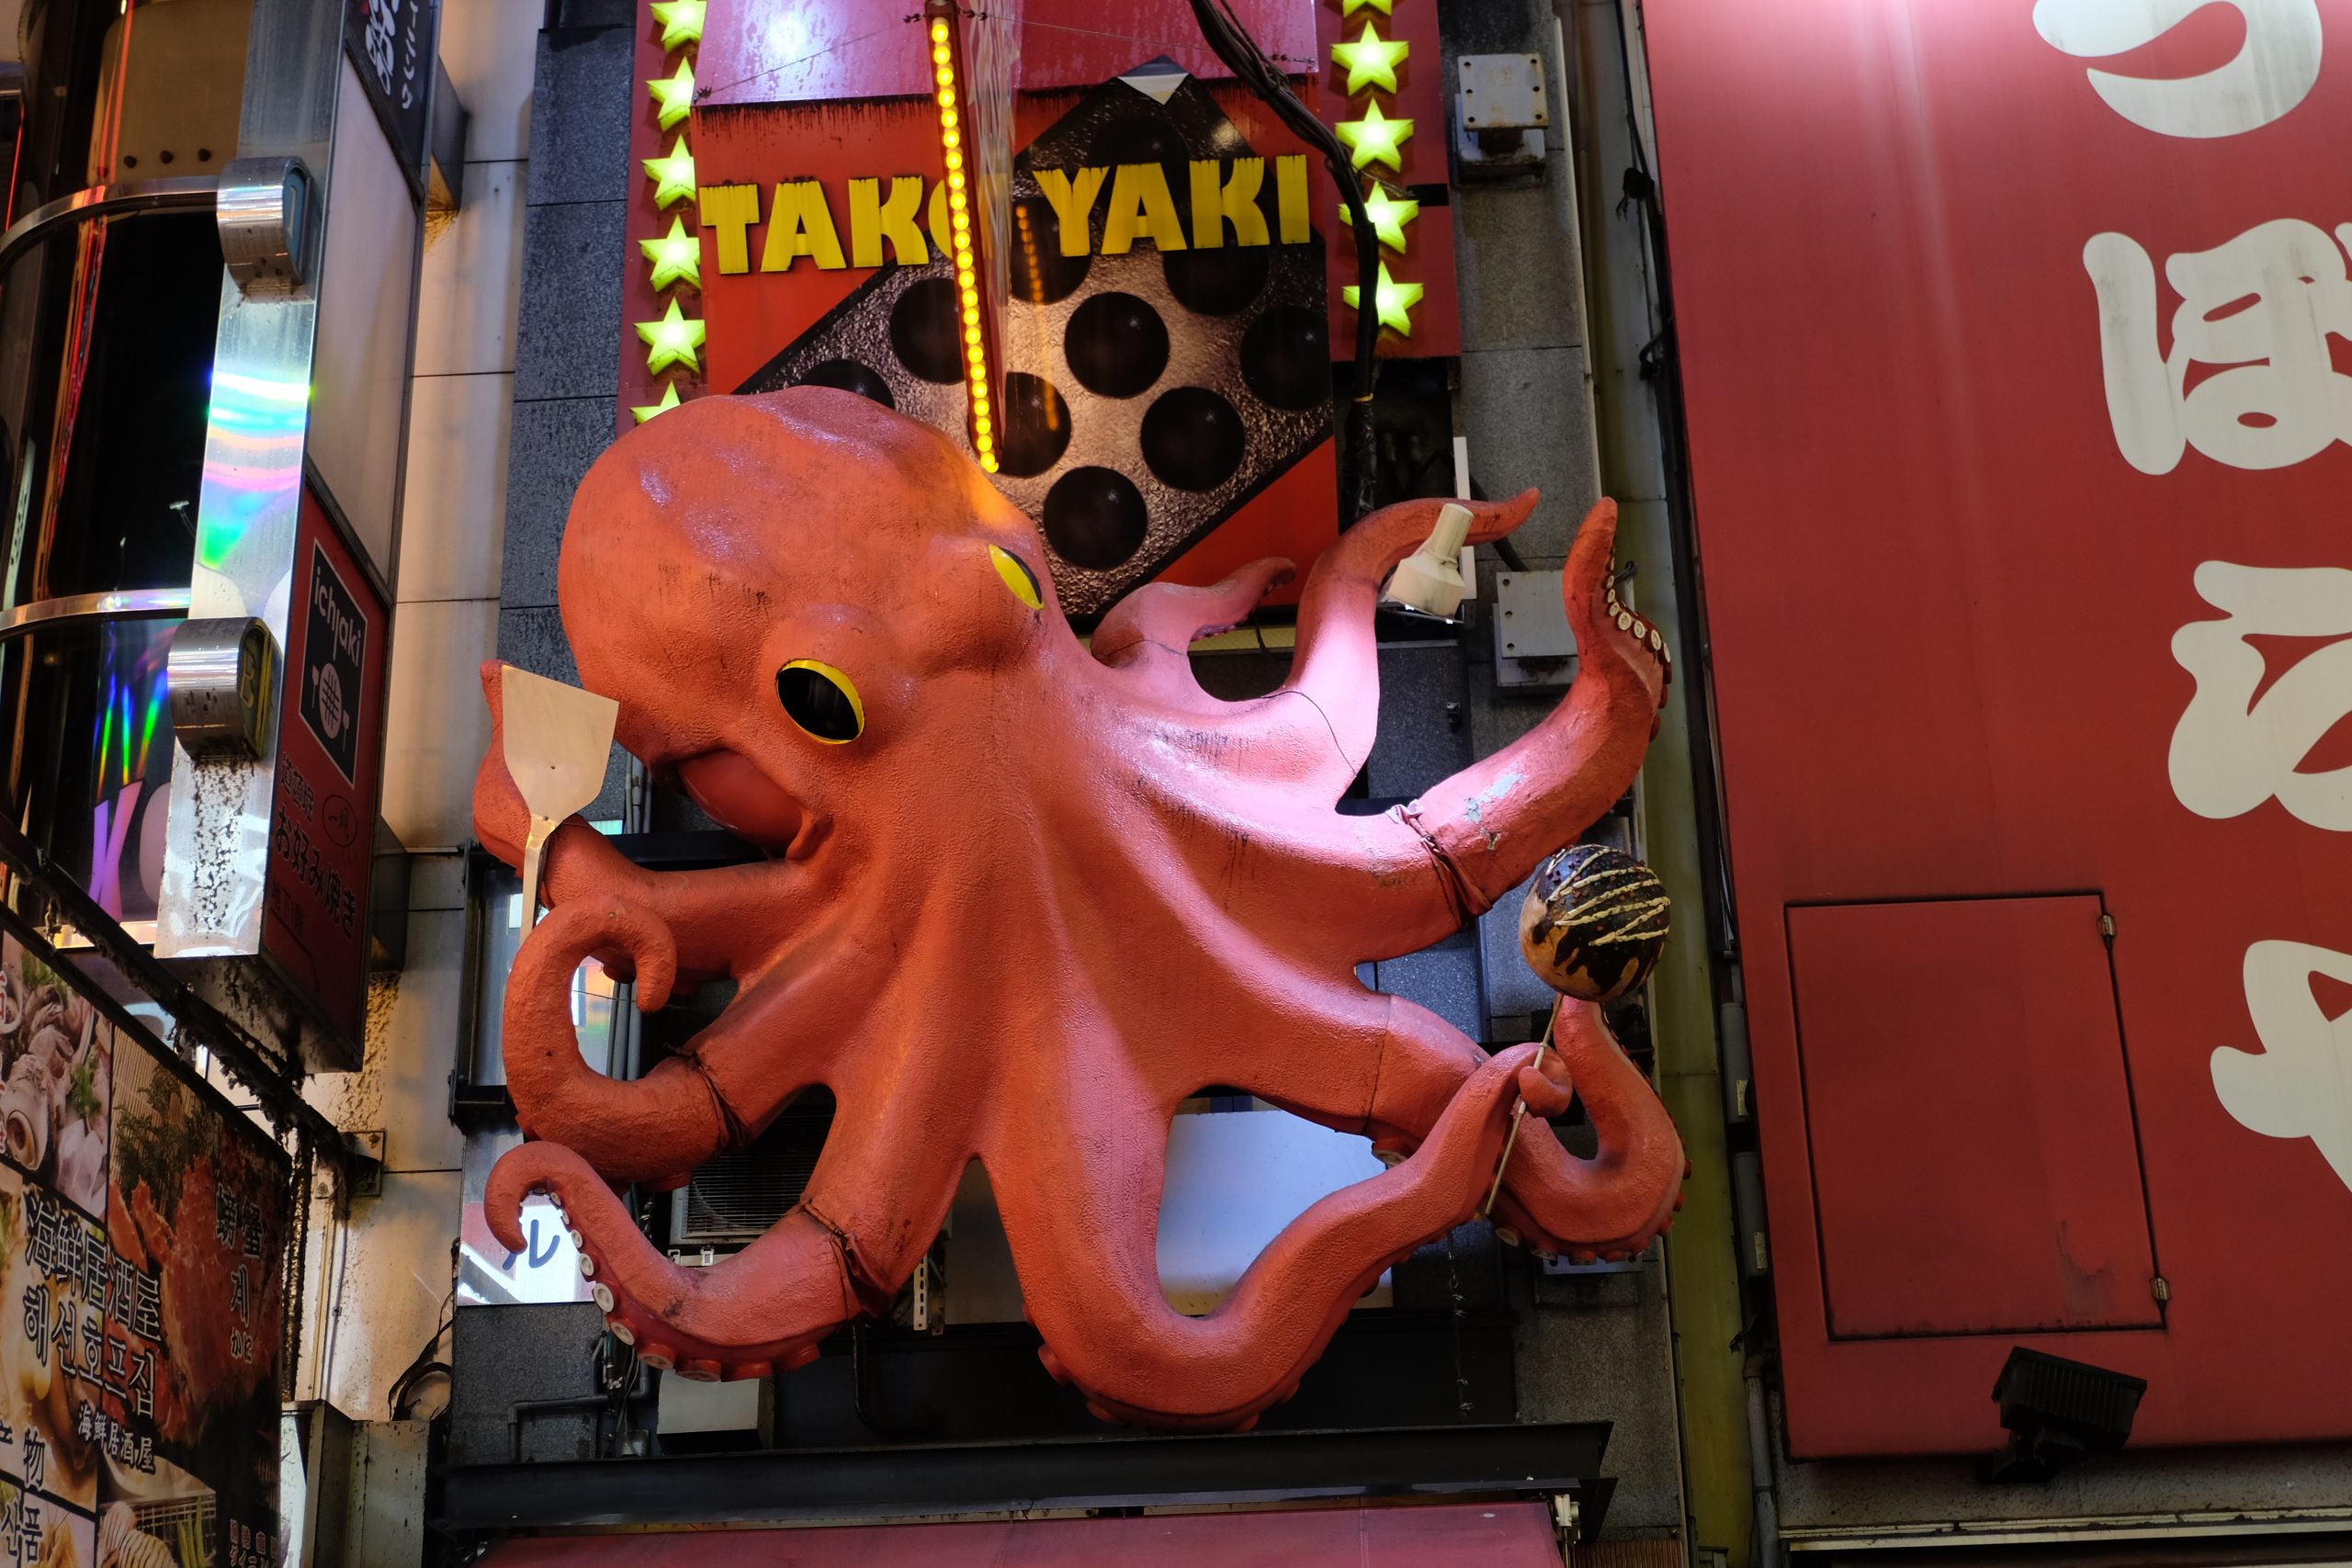 Restaurant advertising takoyaki with a large octopus mascot